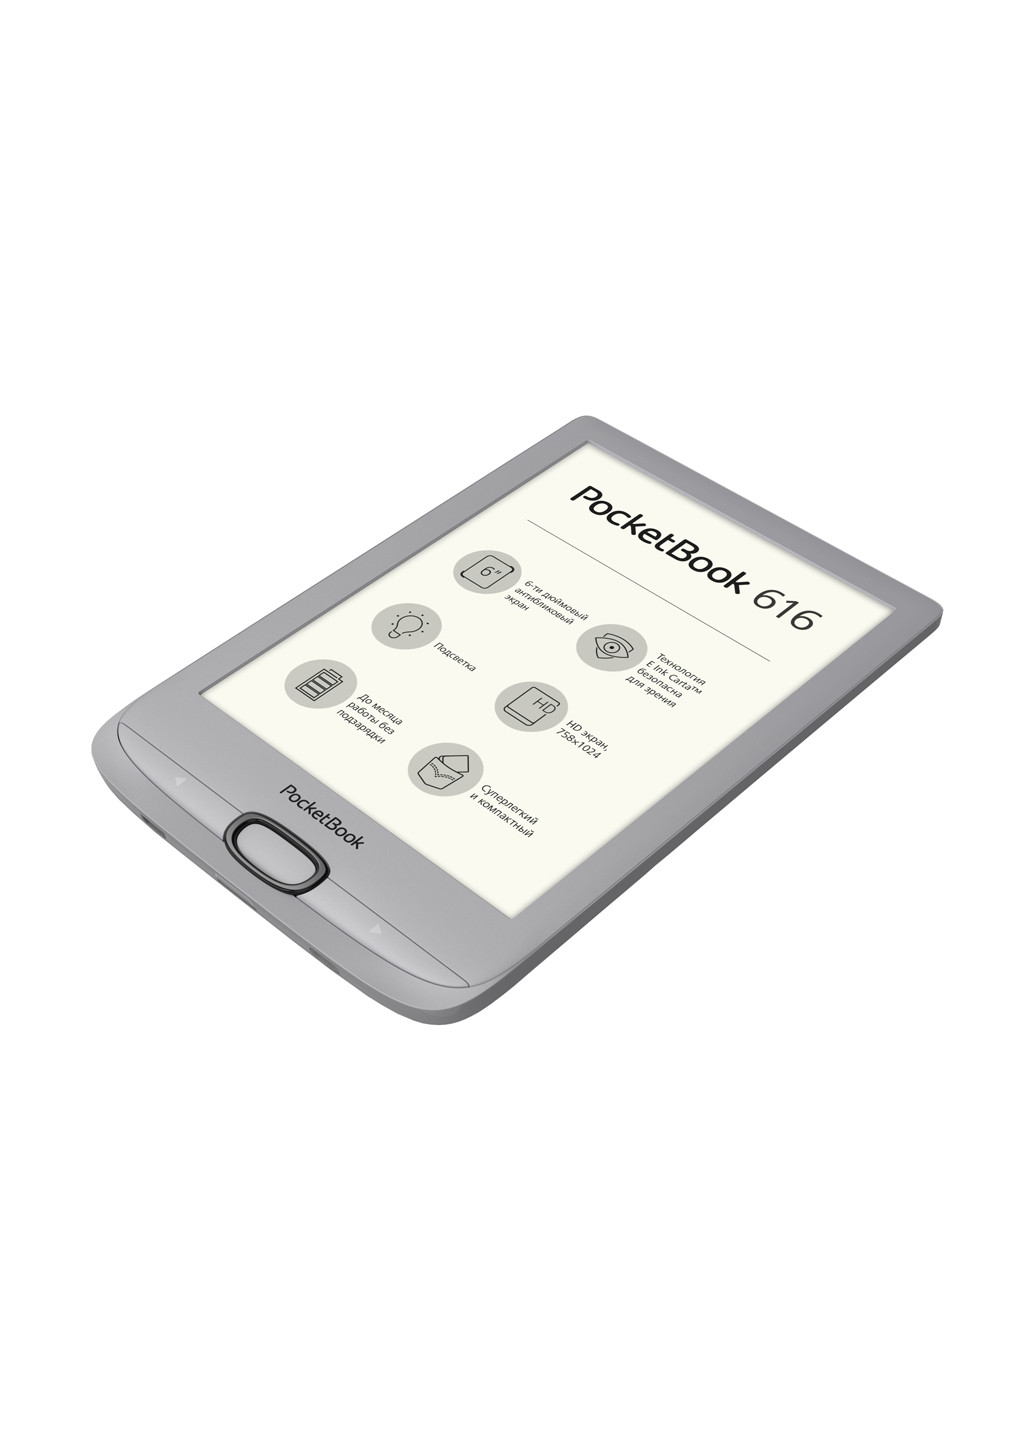 Электронная книга PocketBook 616 Basic Lux 2 (PB616-S-CIS) Matte Silver серебряная